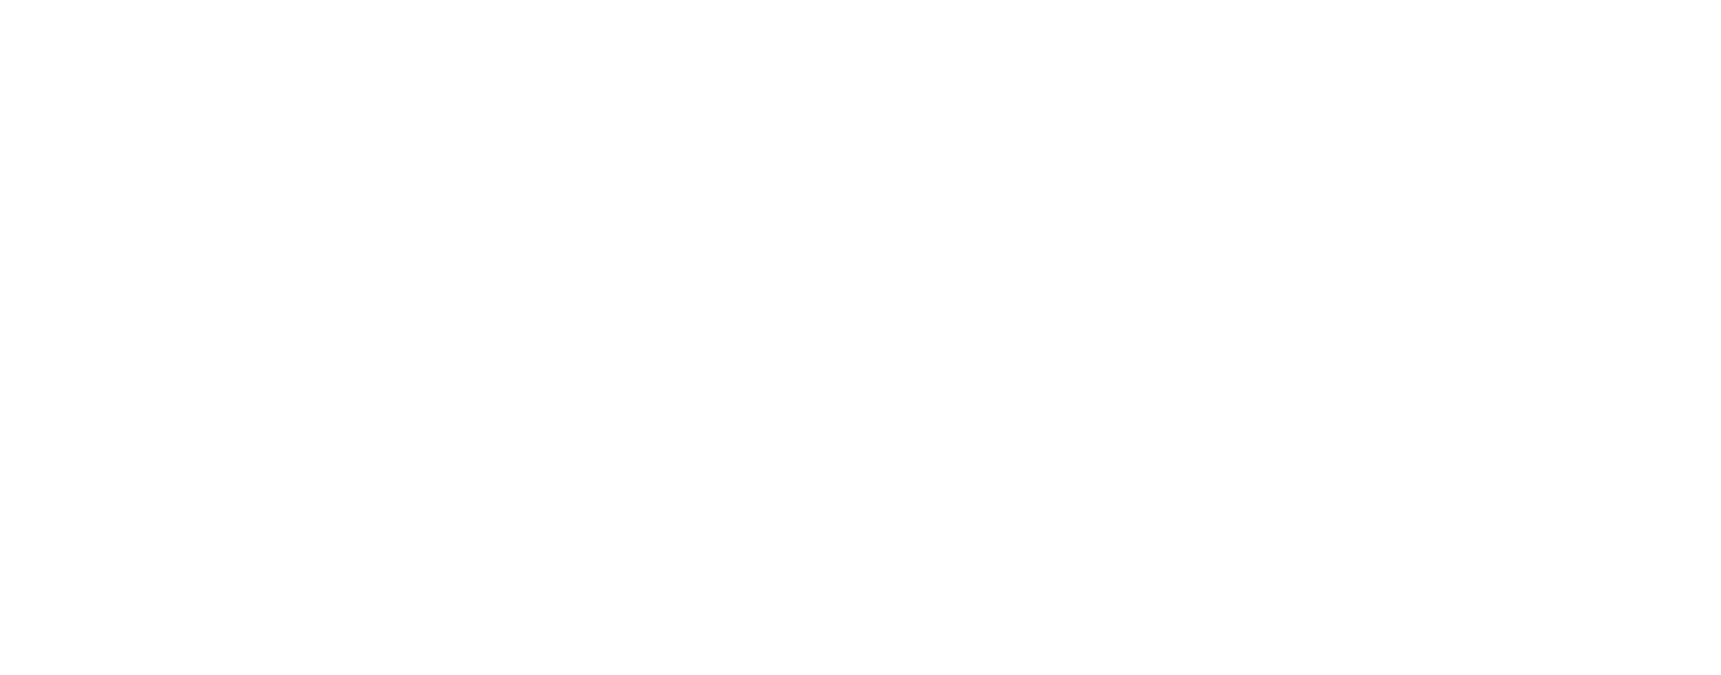 The Tipsy Steer logo scroll